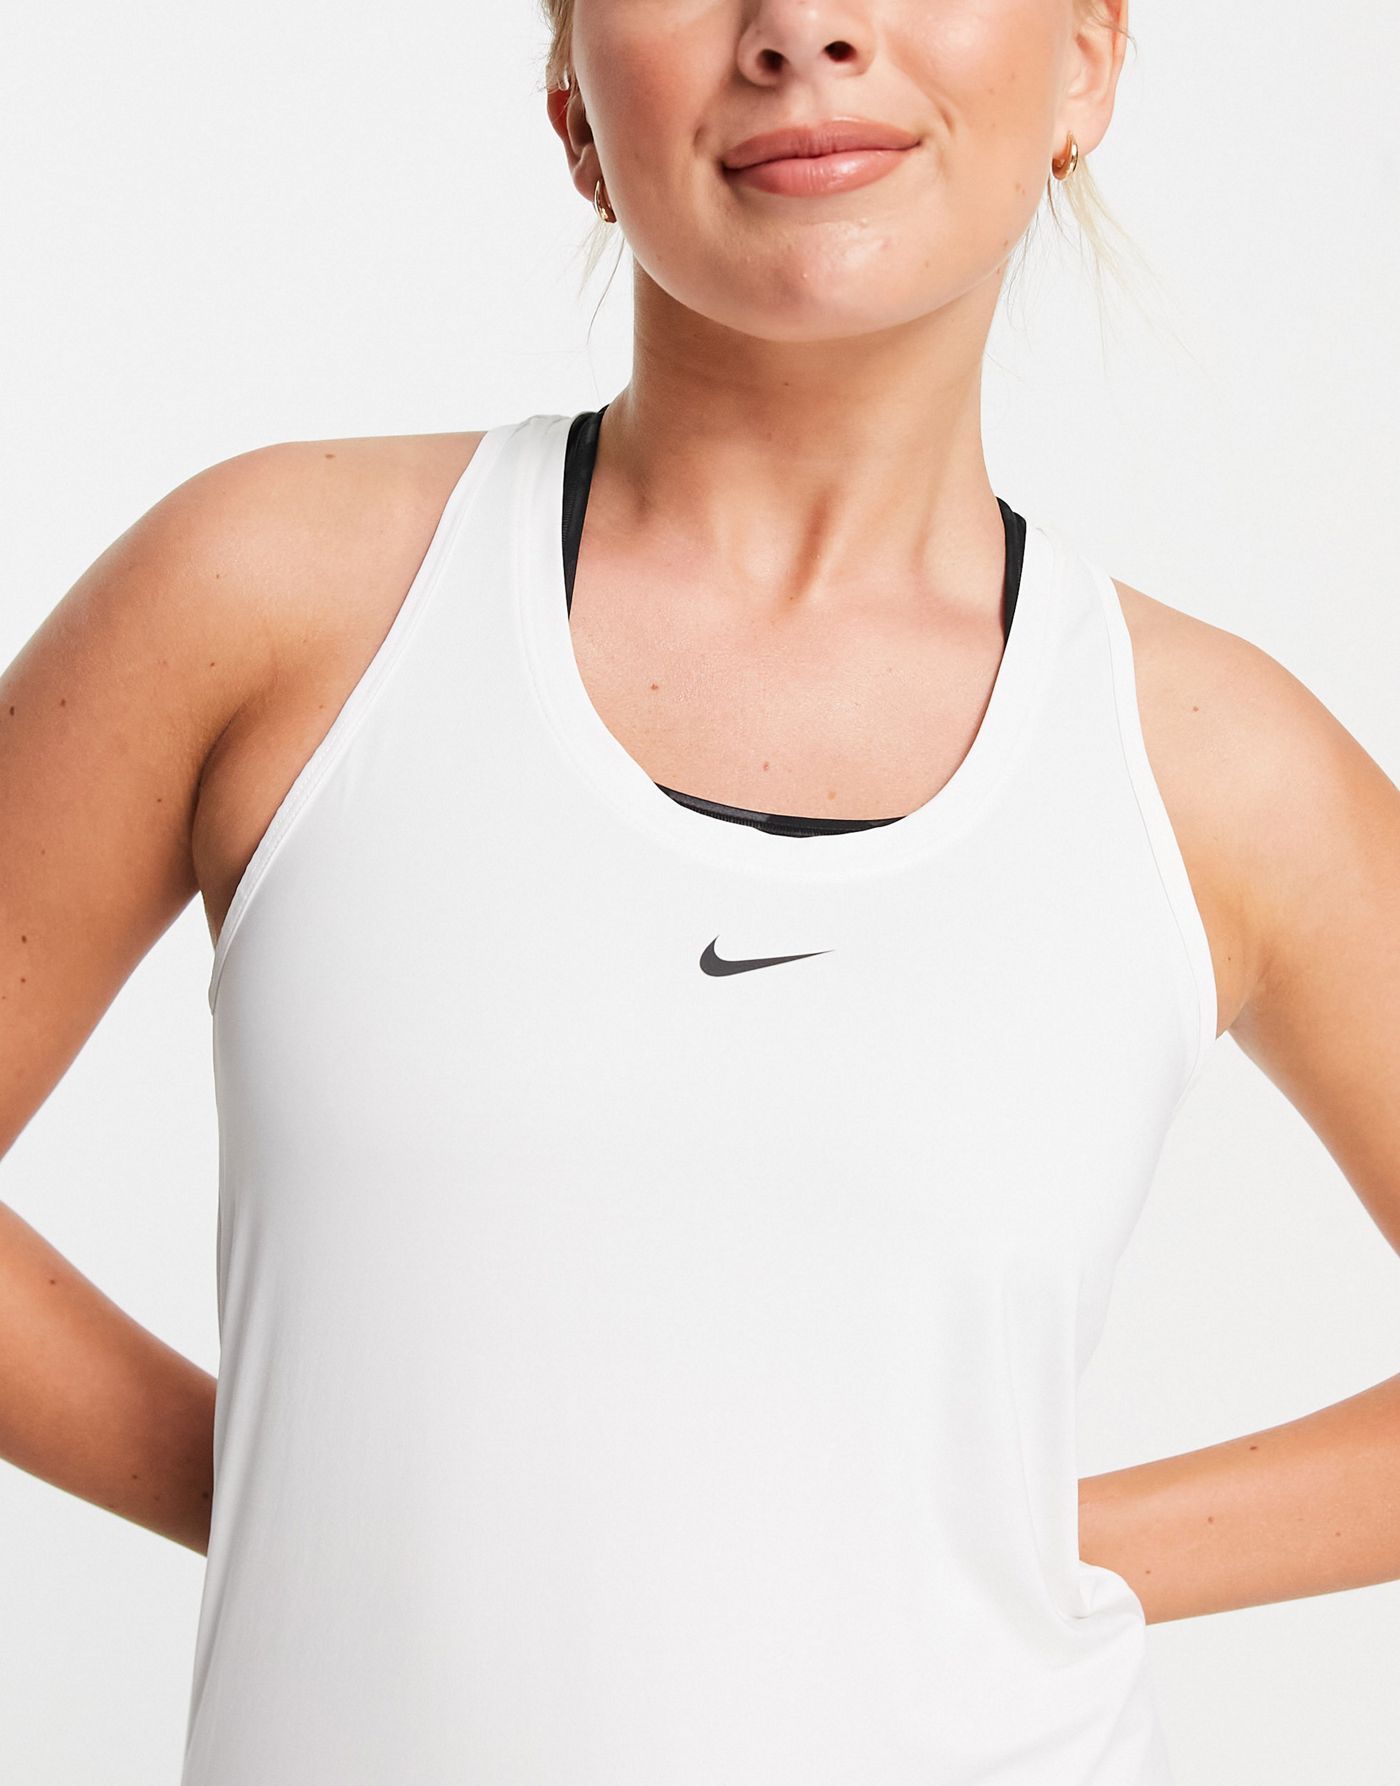 Nike Training One Dri-FIT slim vest top in white